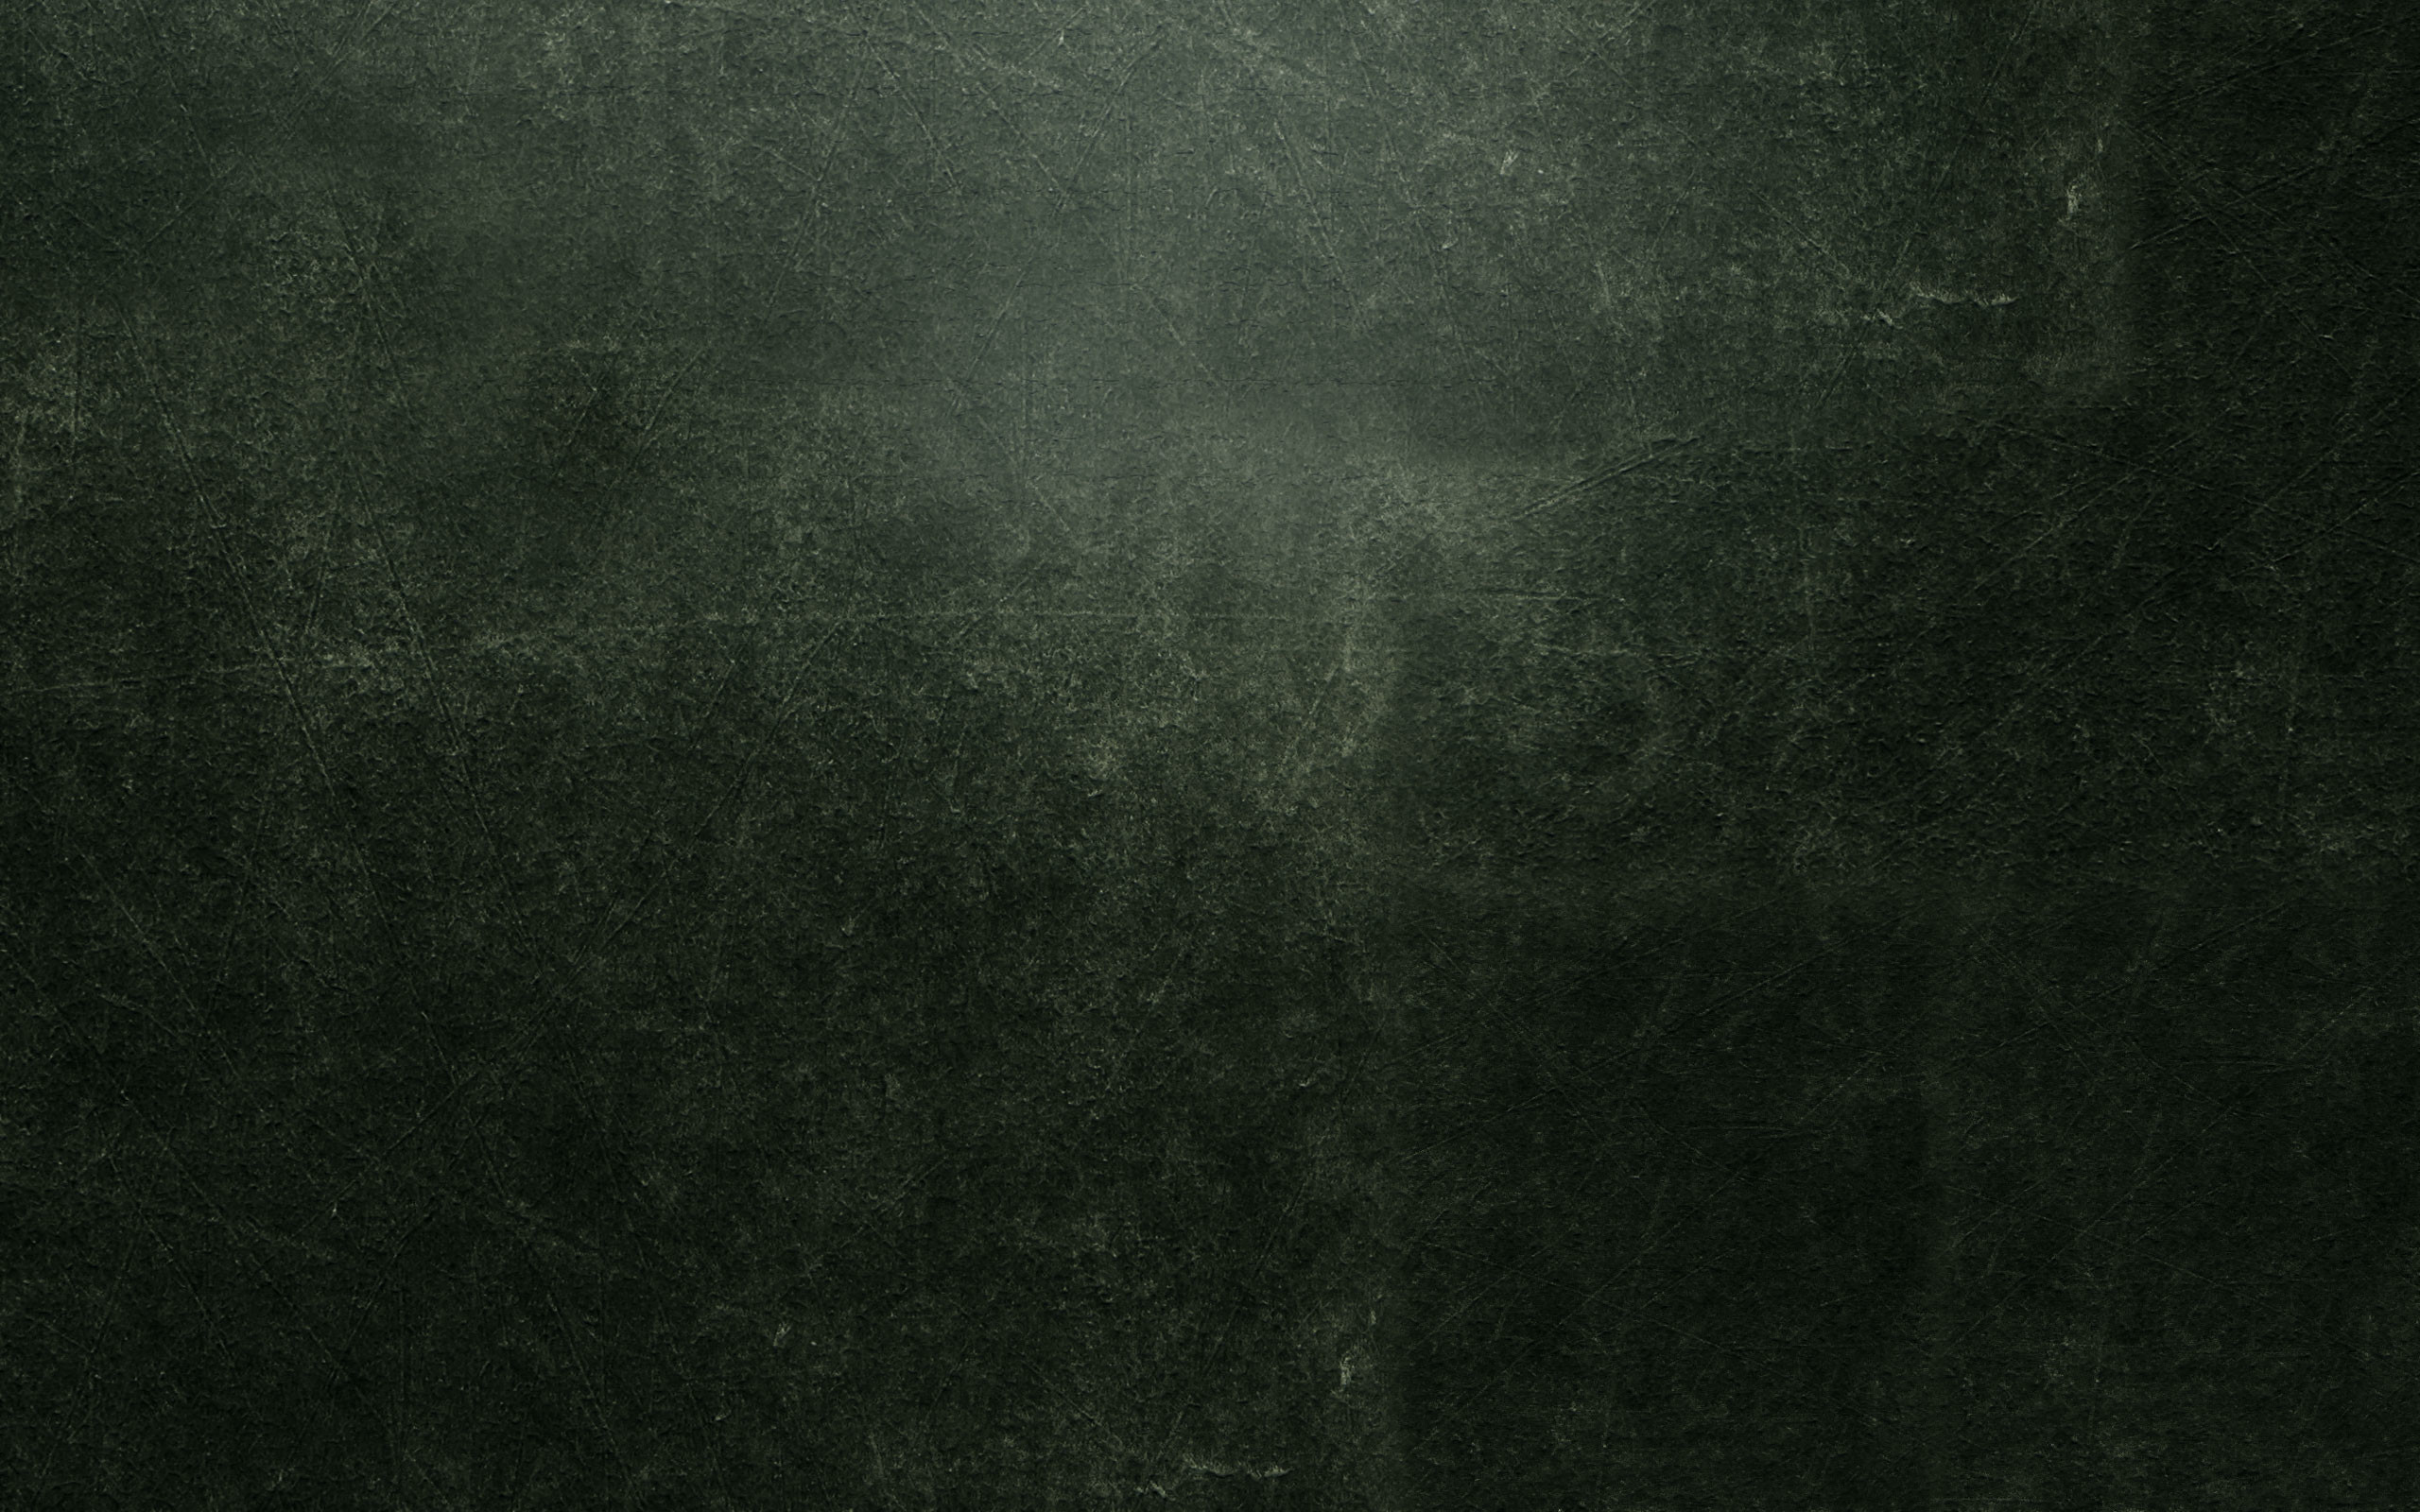 2560x1600 #dark #wallpapers via http://www.wallsave.com